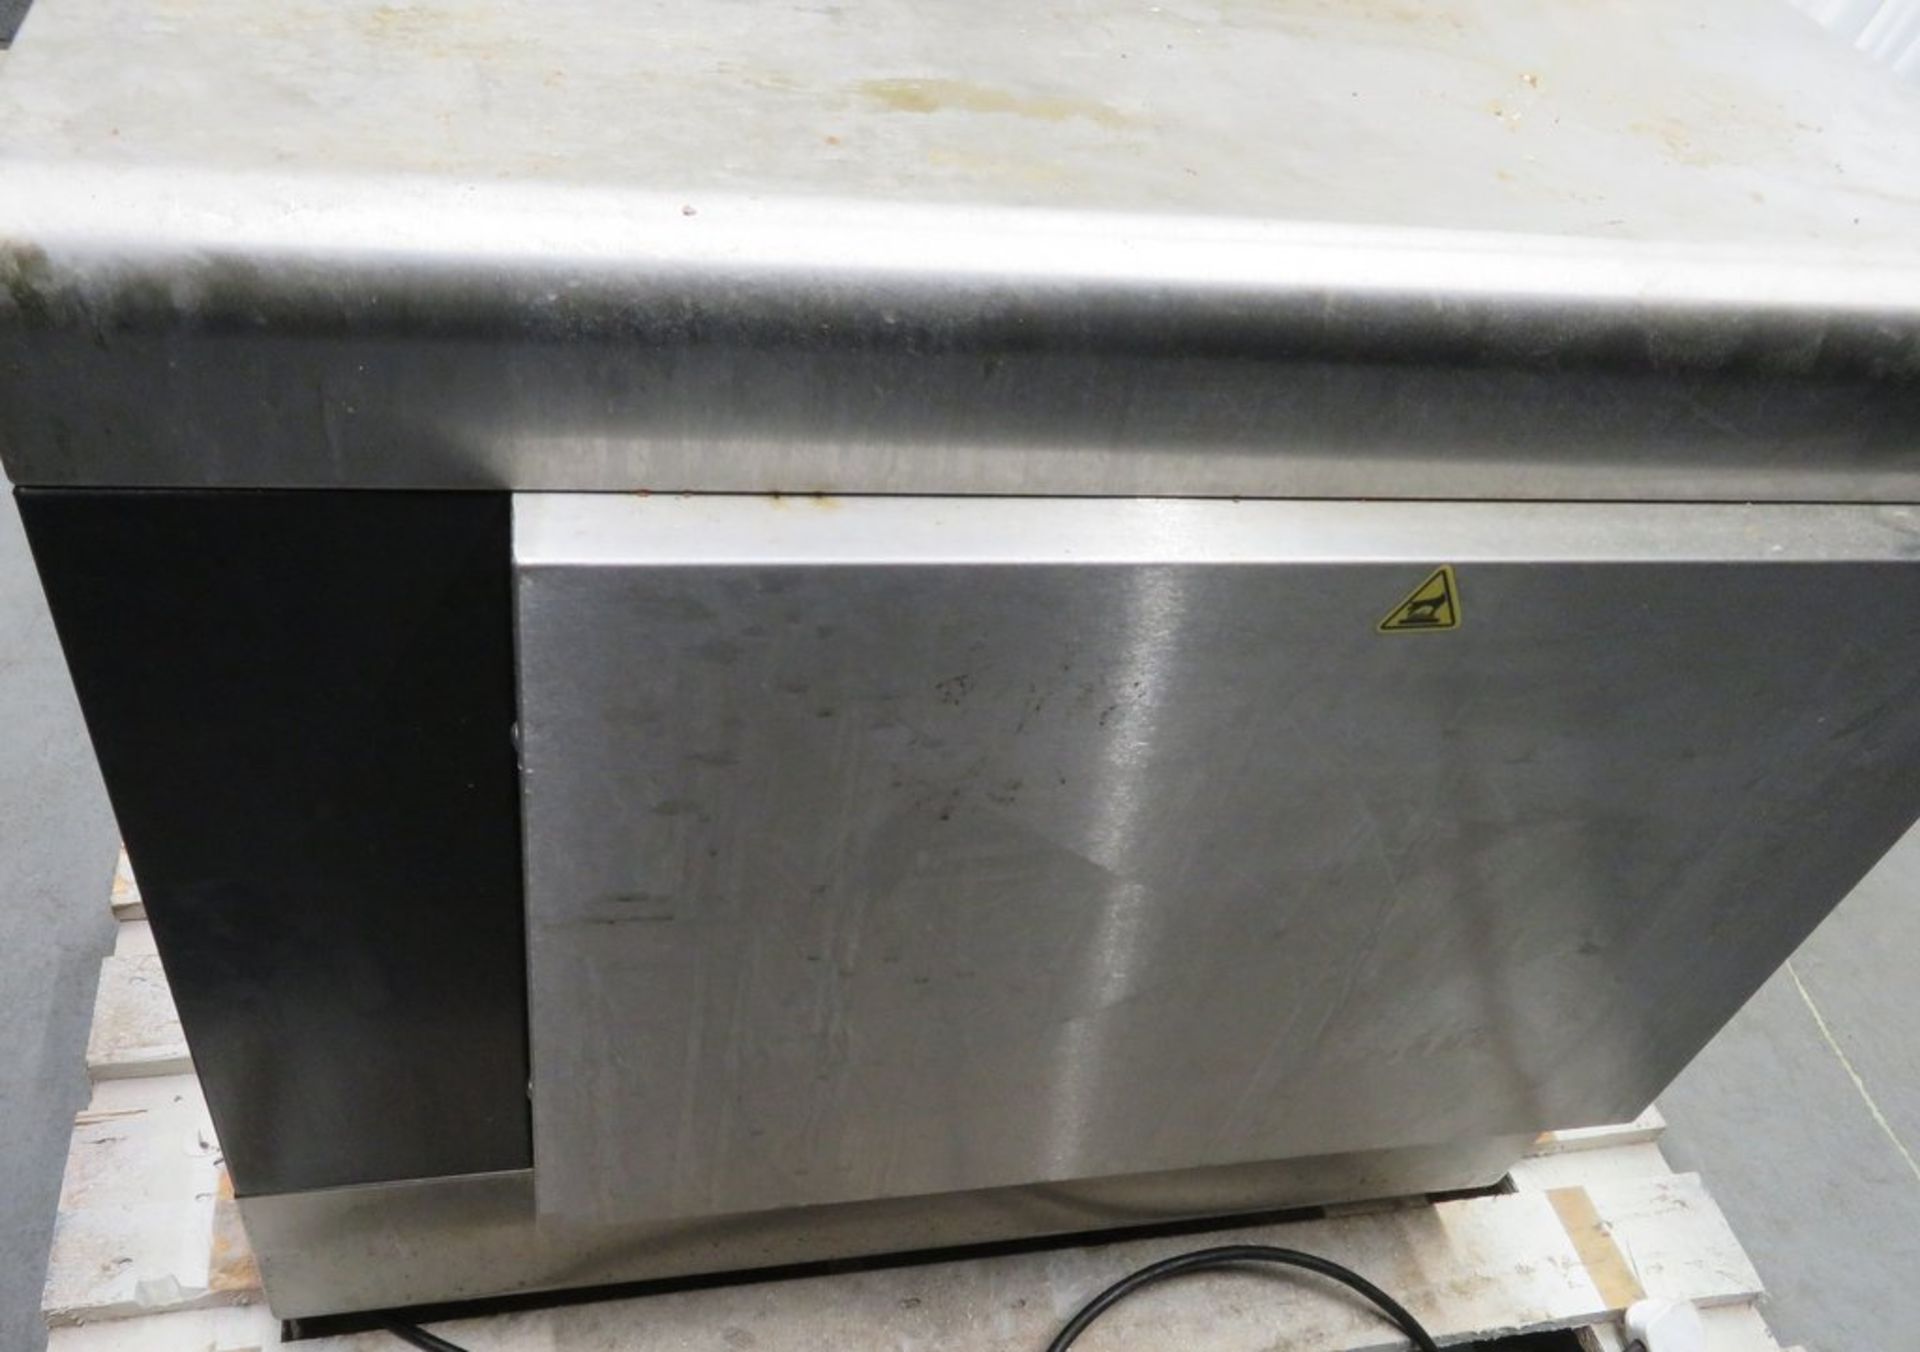 Fri-jado rotisserie oven, 1 phase electric - Image 6 of 8